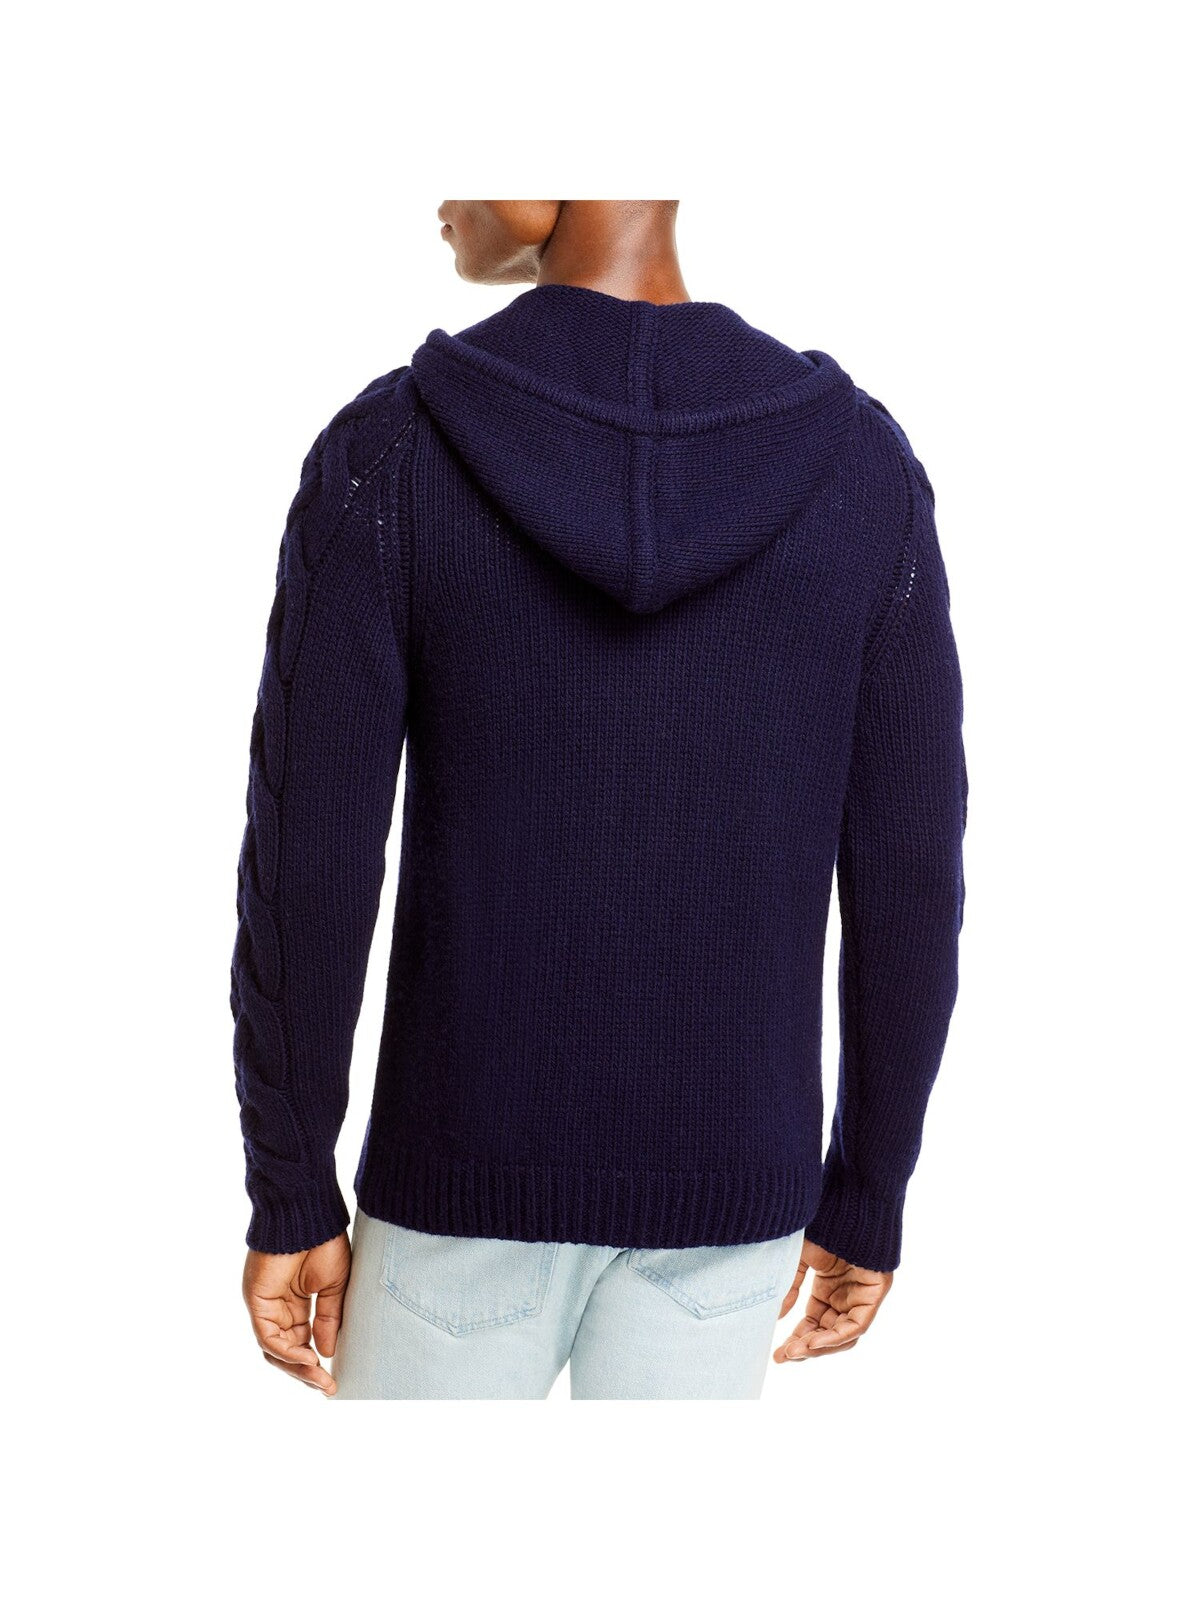 THE MENS STORE Mens Navy Collarless Full Zip Wool Blend Sweater M